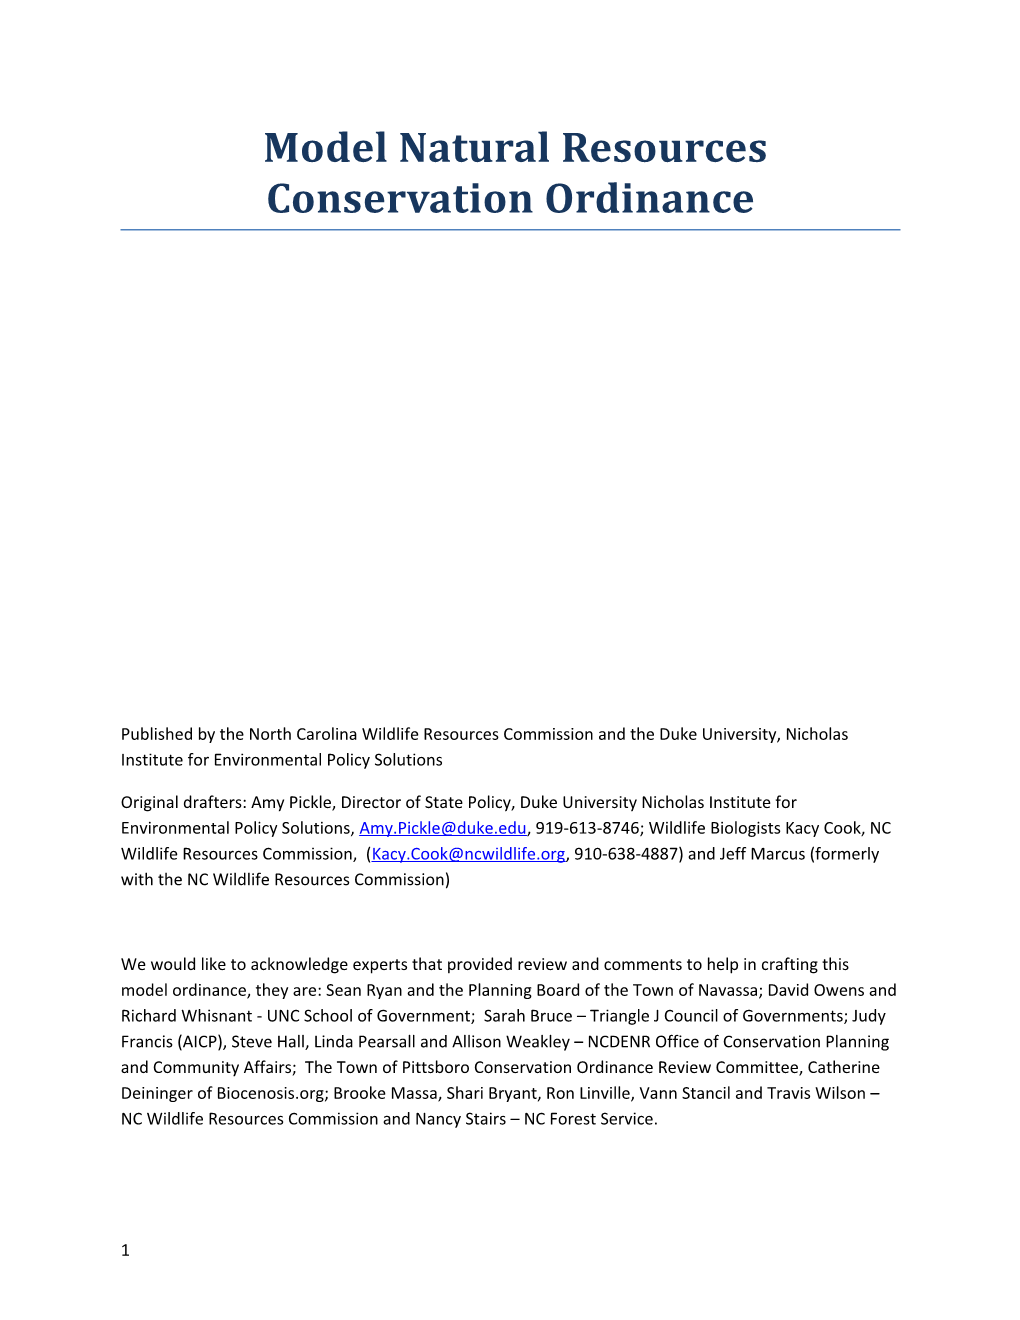 Model Natural Resources Conservation Ordinance